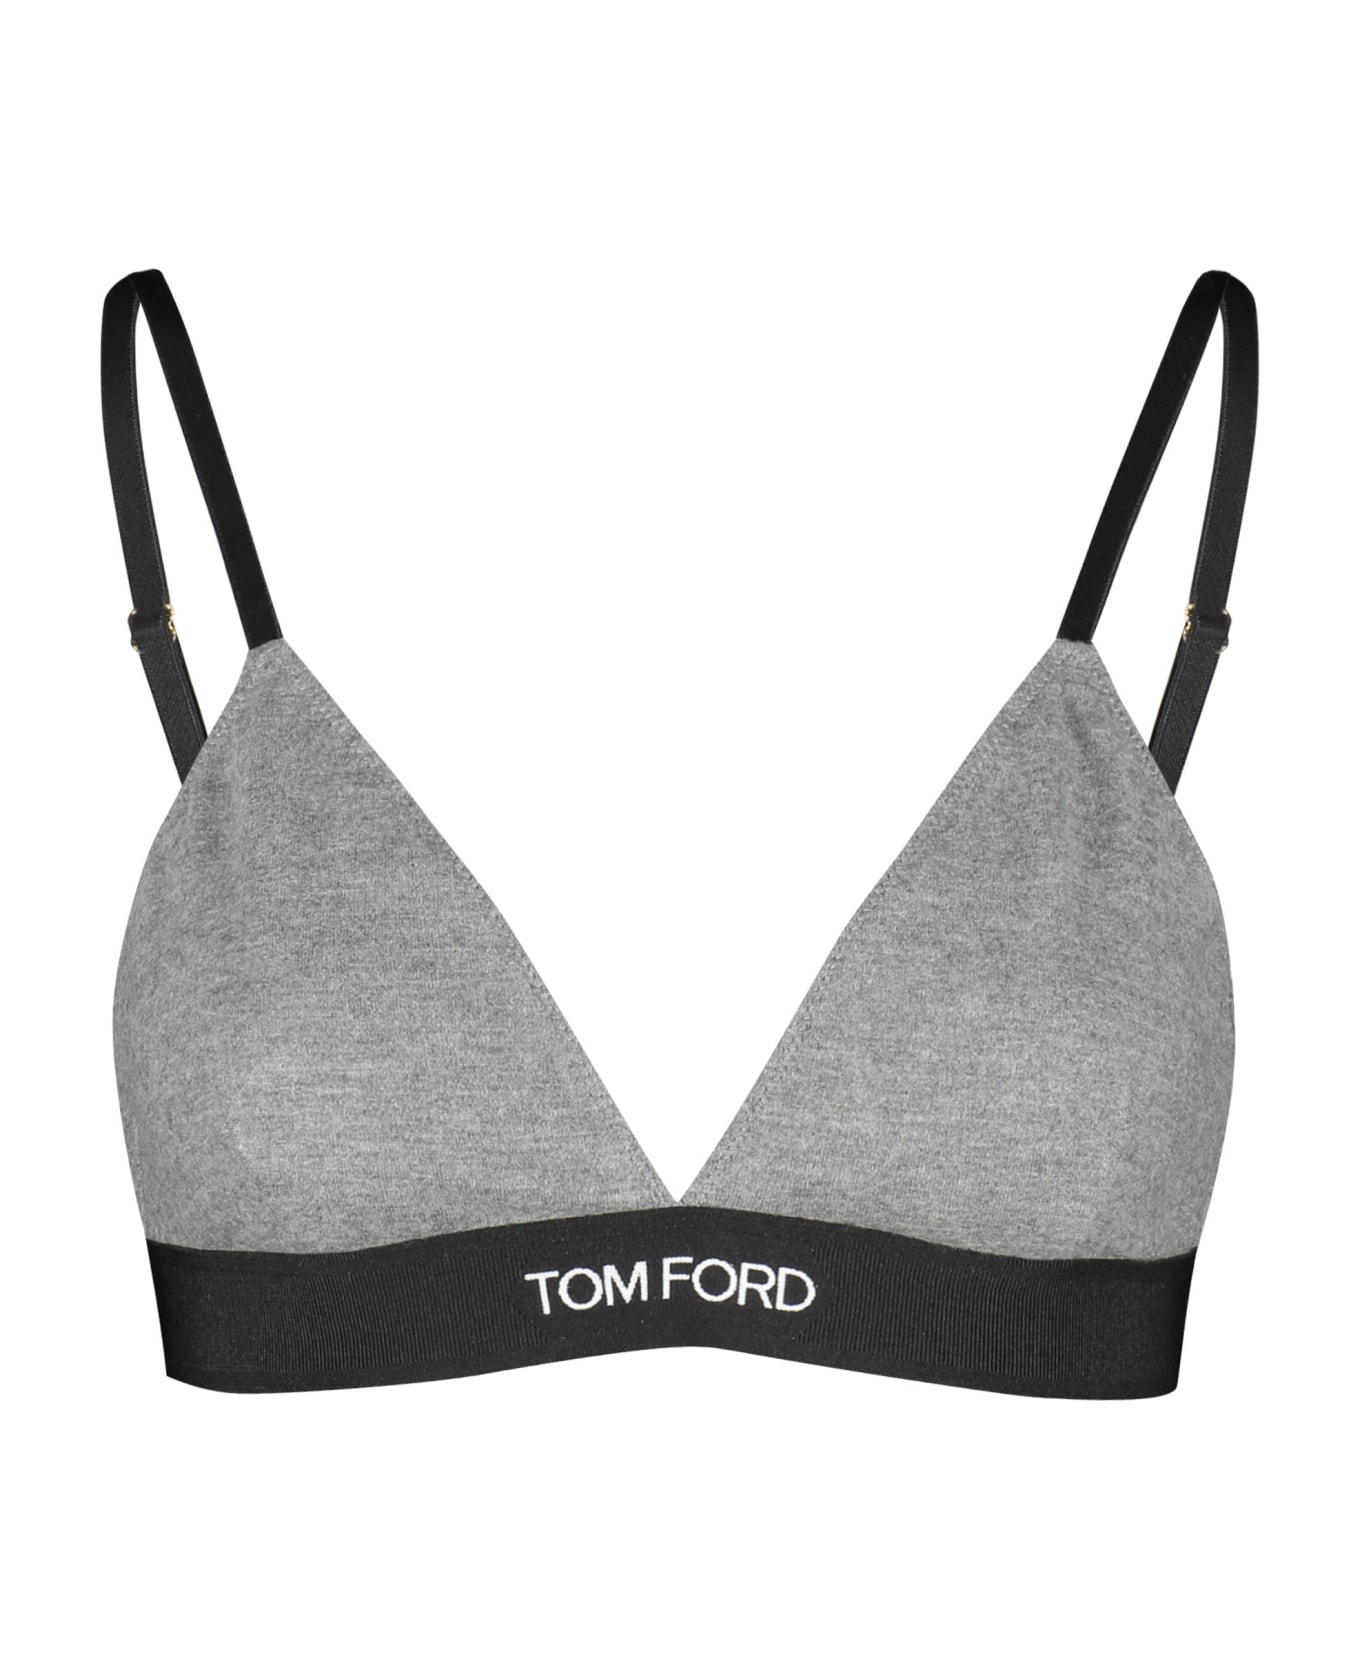 Tom Ford Triangle Bra - grey ブラジャー